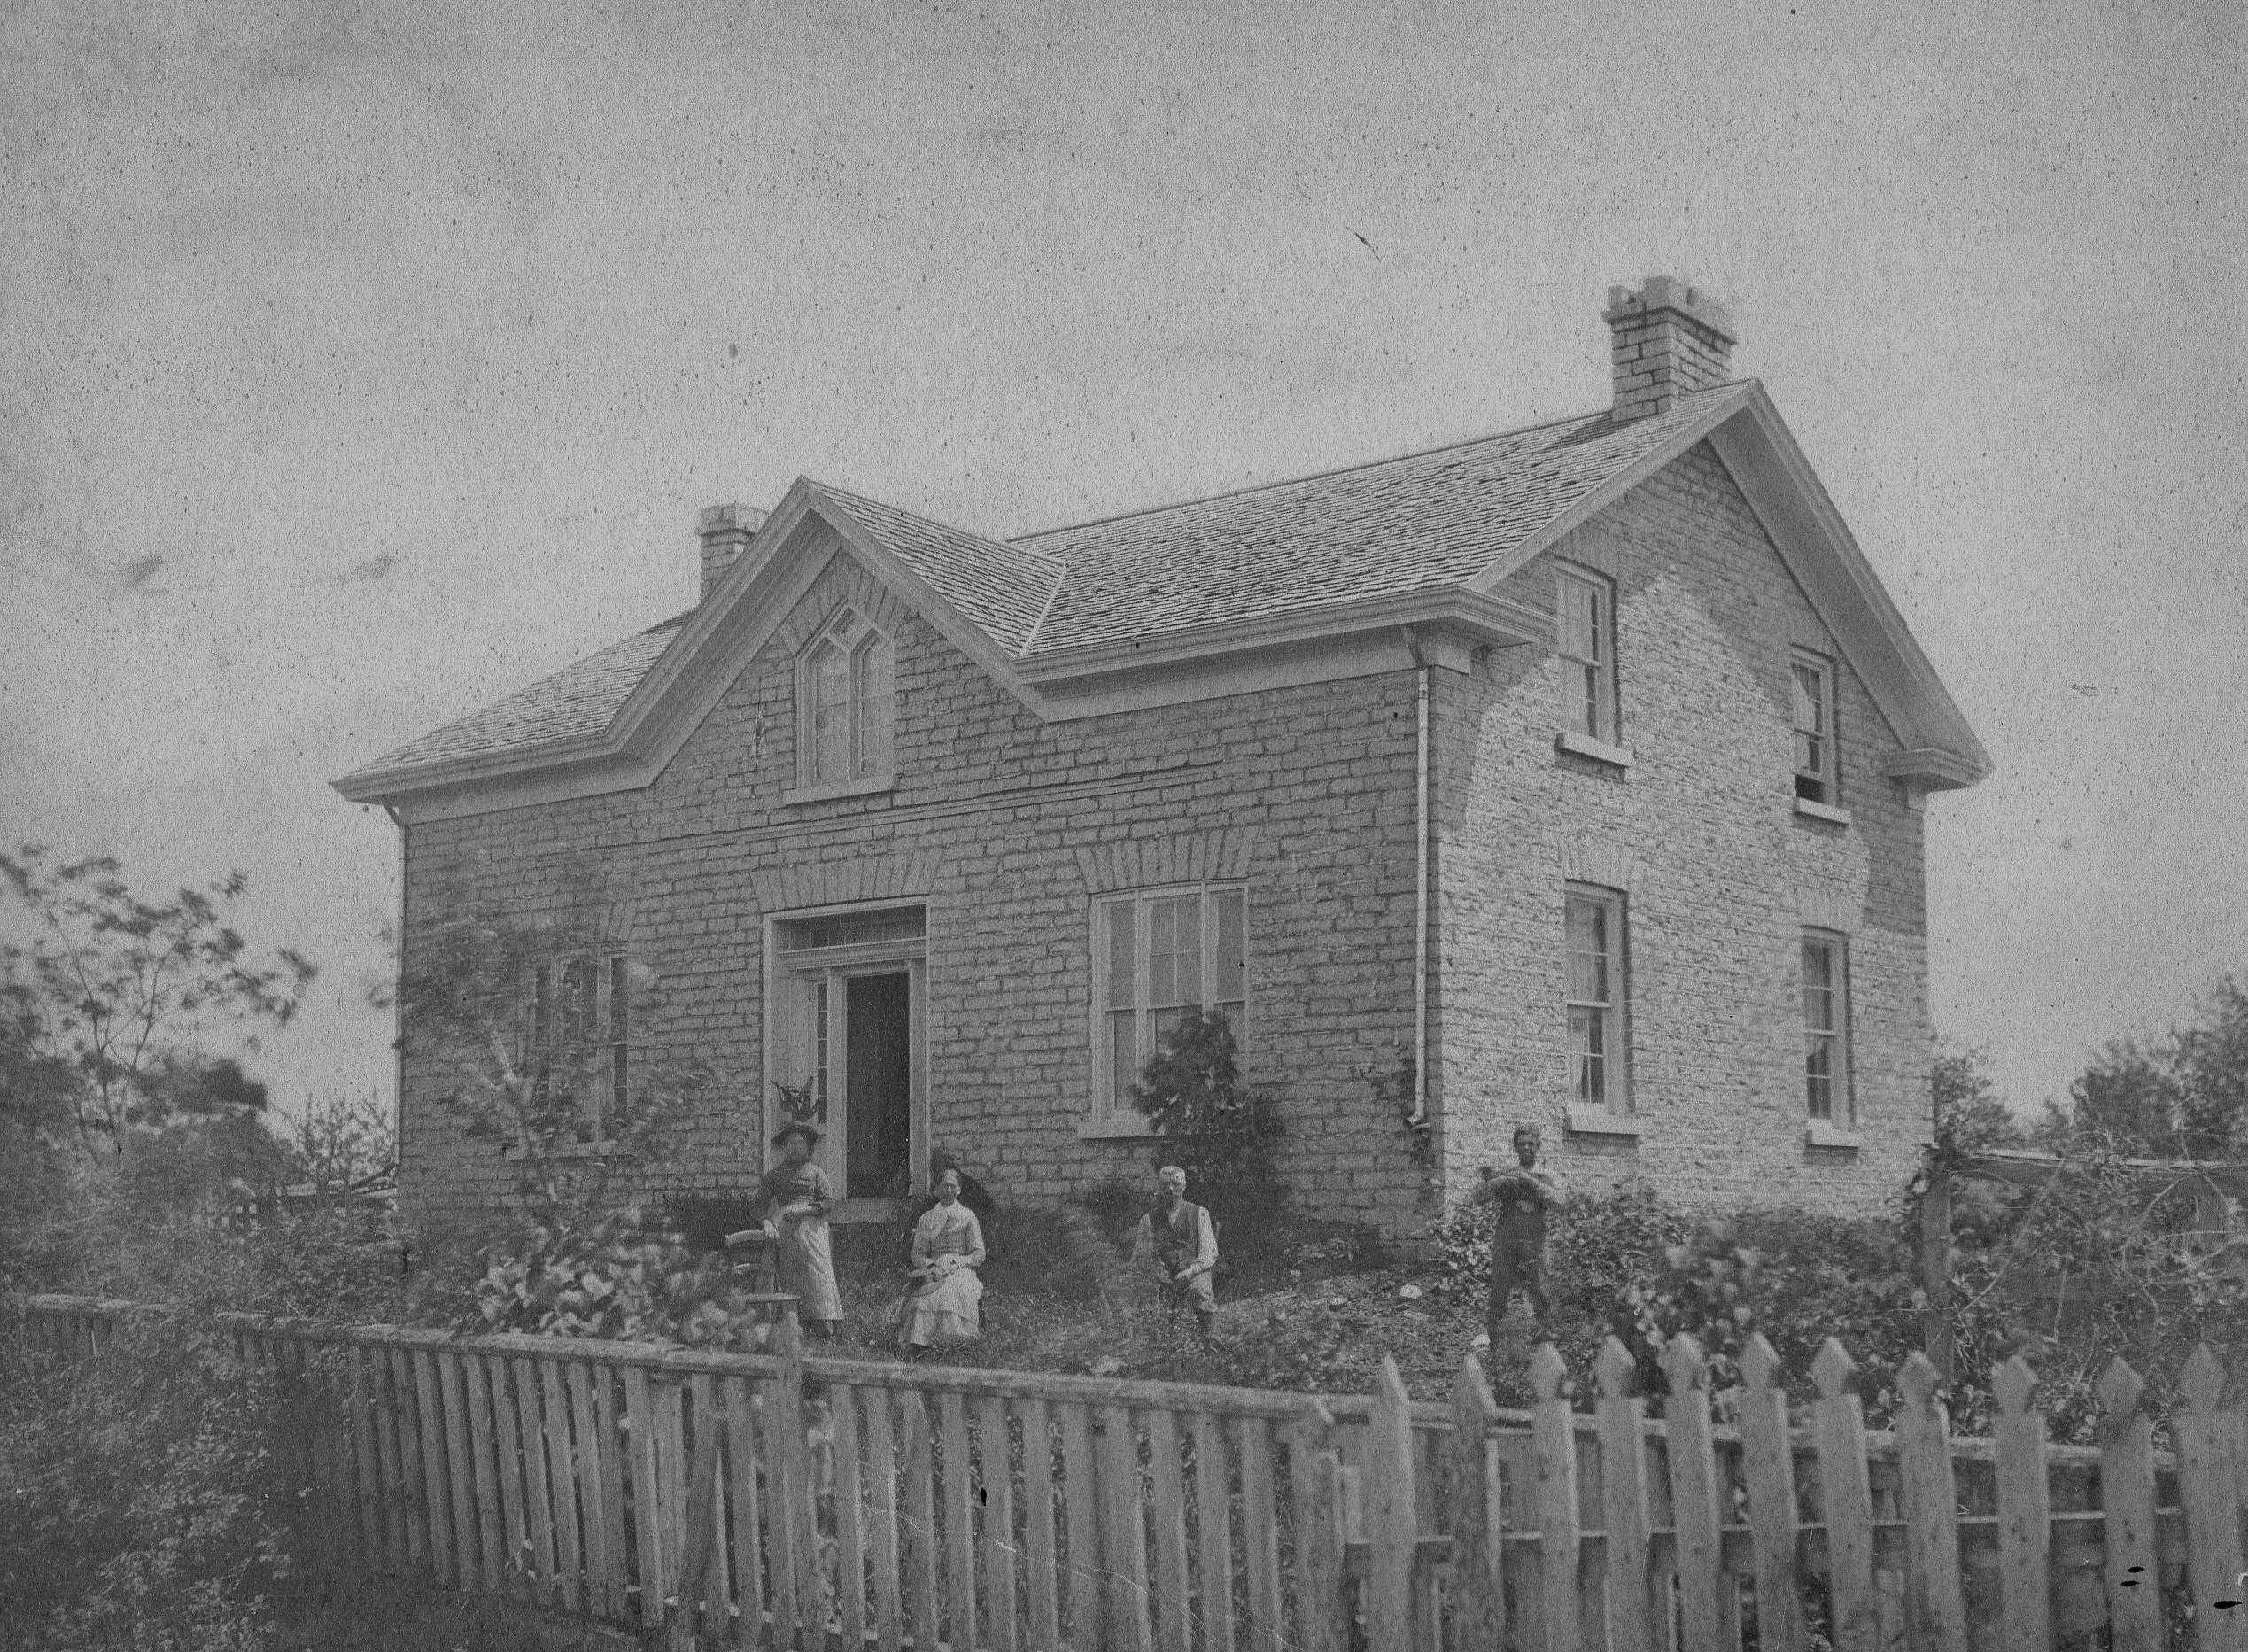 Gothic Revival I-House Ca. 1850s